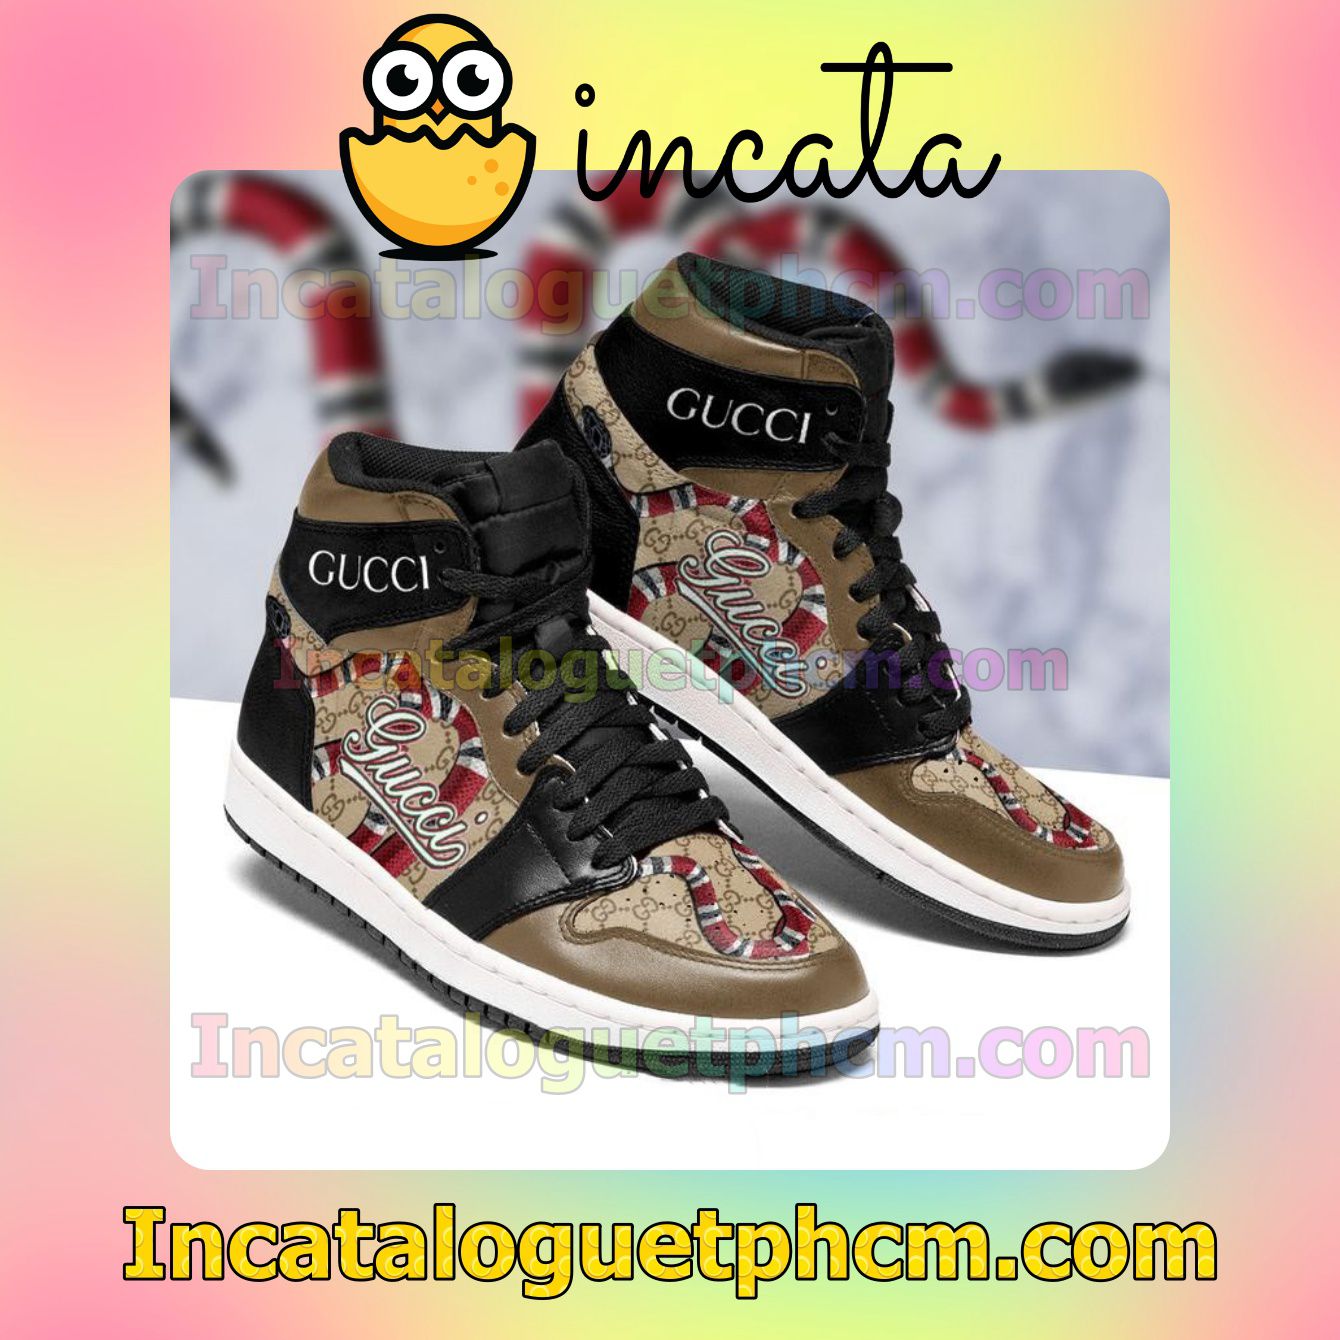 Gucci Snake Brown Air Jordan 1 Inspired Shoes